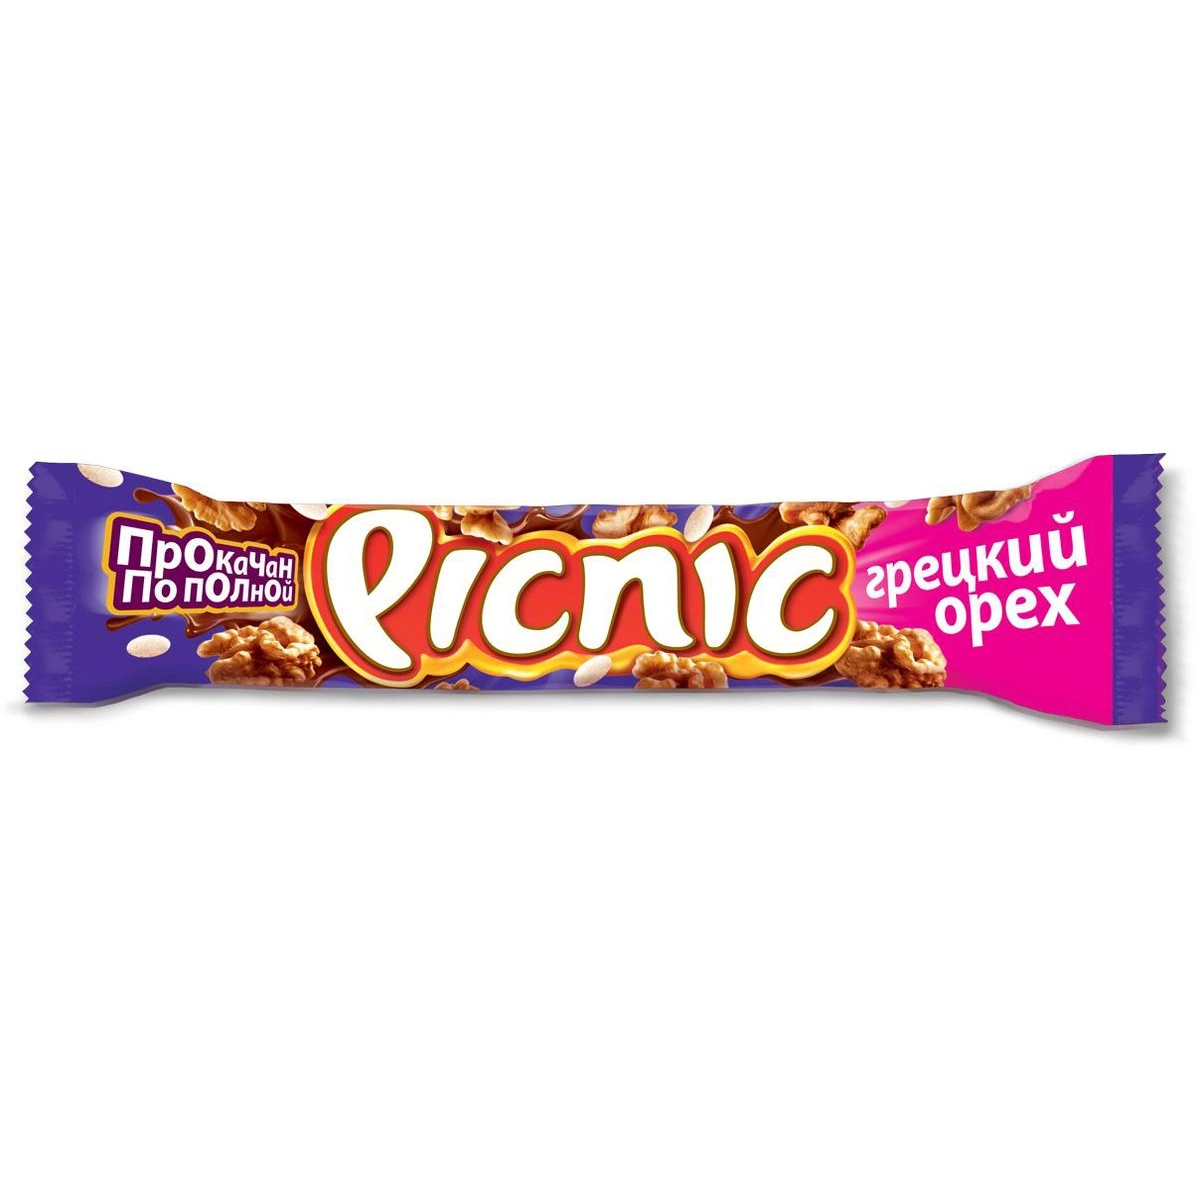 Батончик Picnic Грецкий орех, 52 г батончик шоколадный picnic грецкий орех 52 г